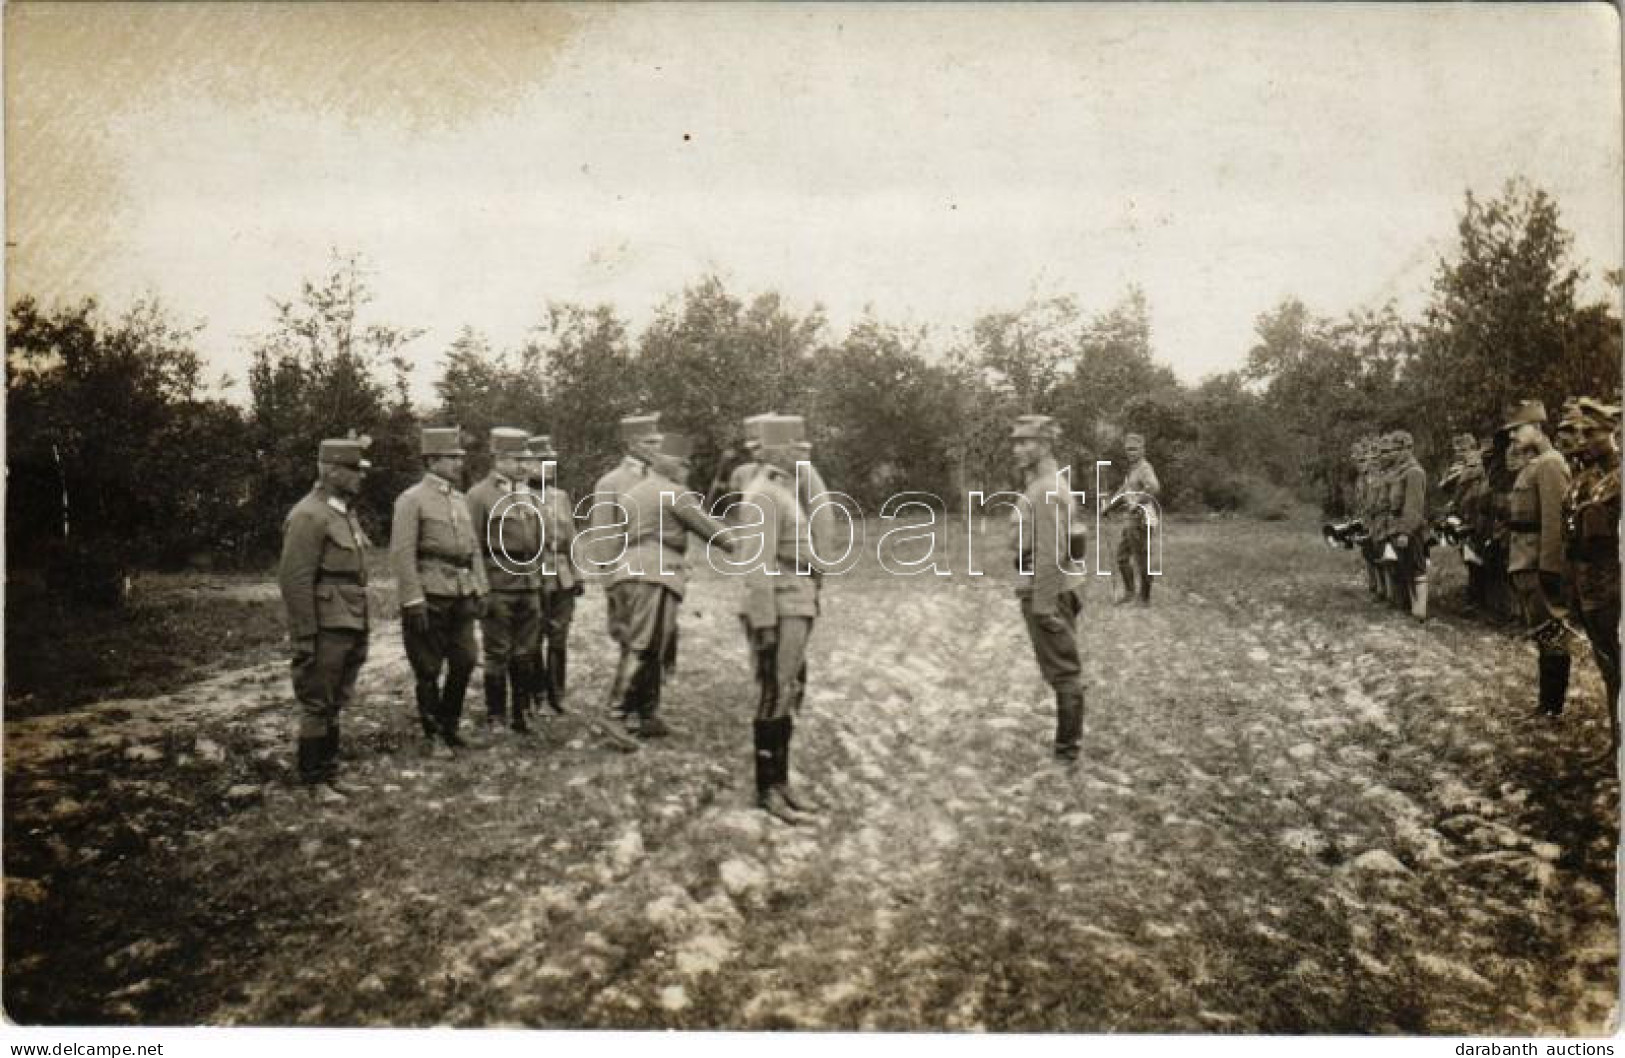 * T2/T3 Osztrák-magyar Tiszti Szemle Katonazenekarral / WWI K.u.k. Austro-Hungarian Military Music Band, Soldiers. Photo - Sin Clasificación